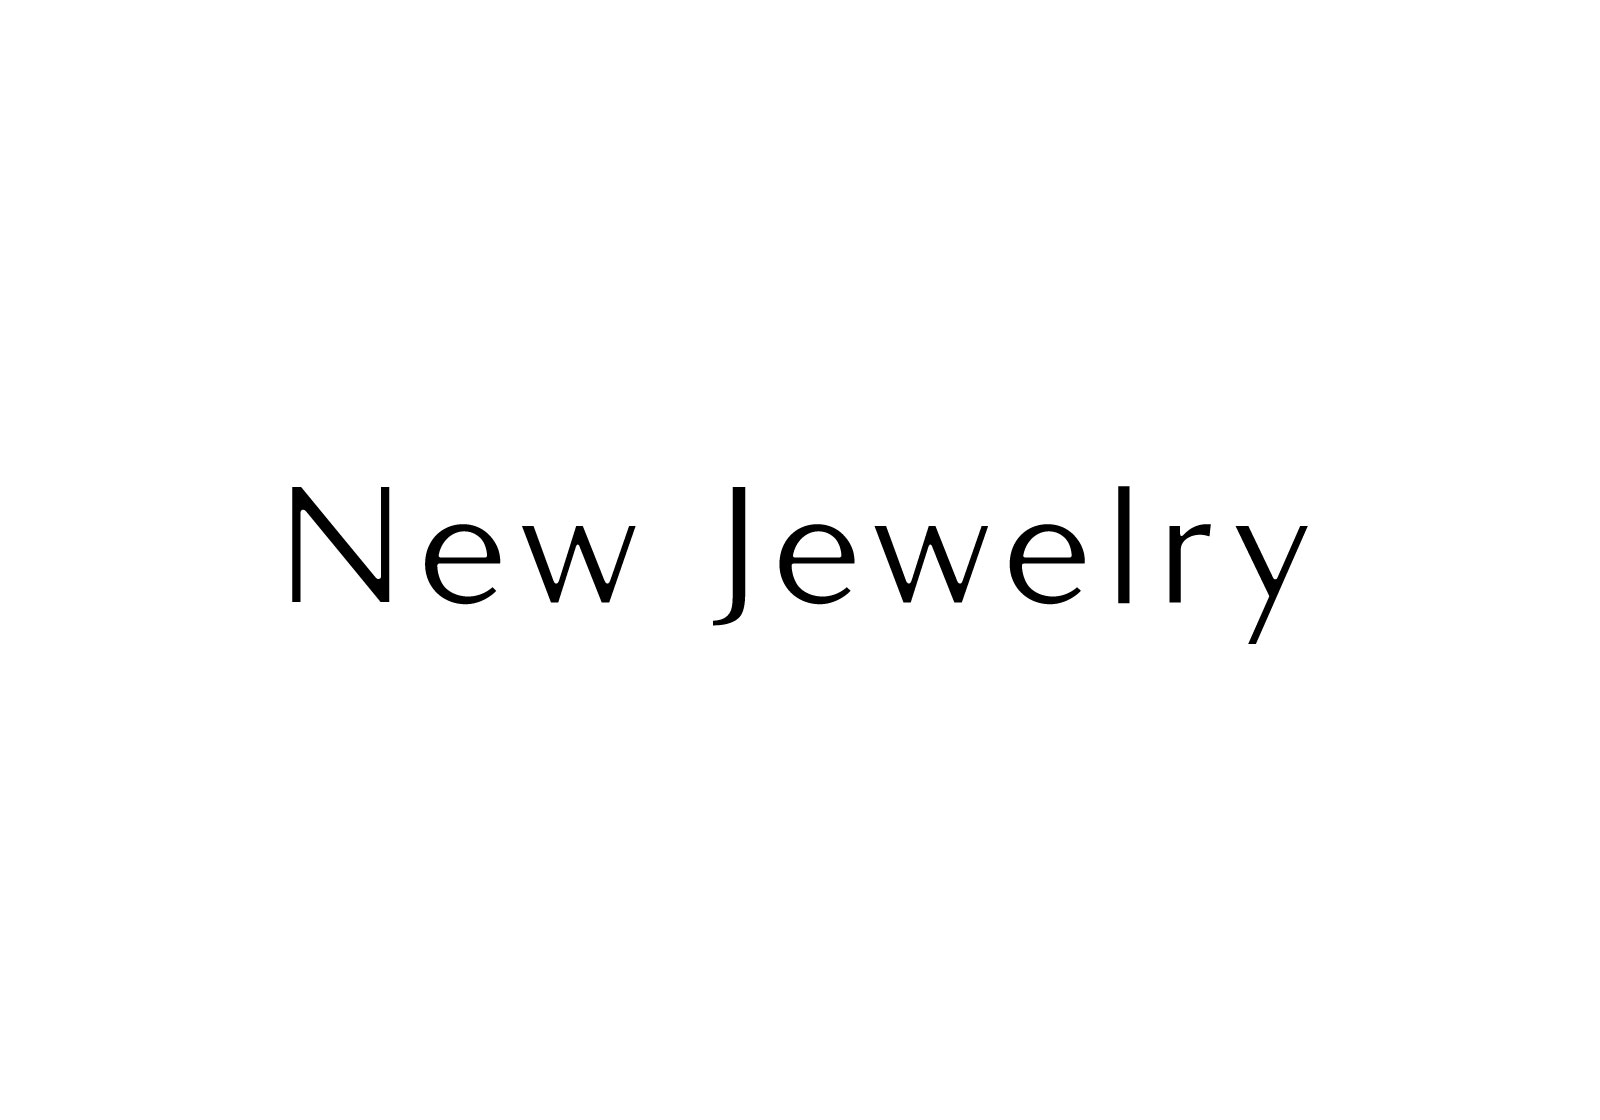 New Jewelry